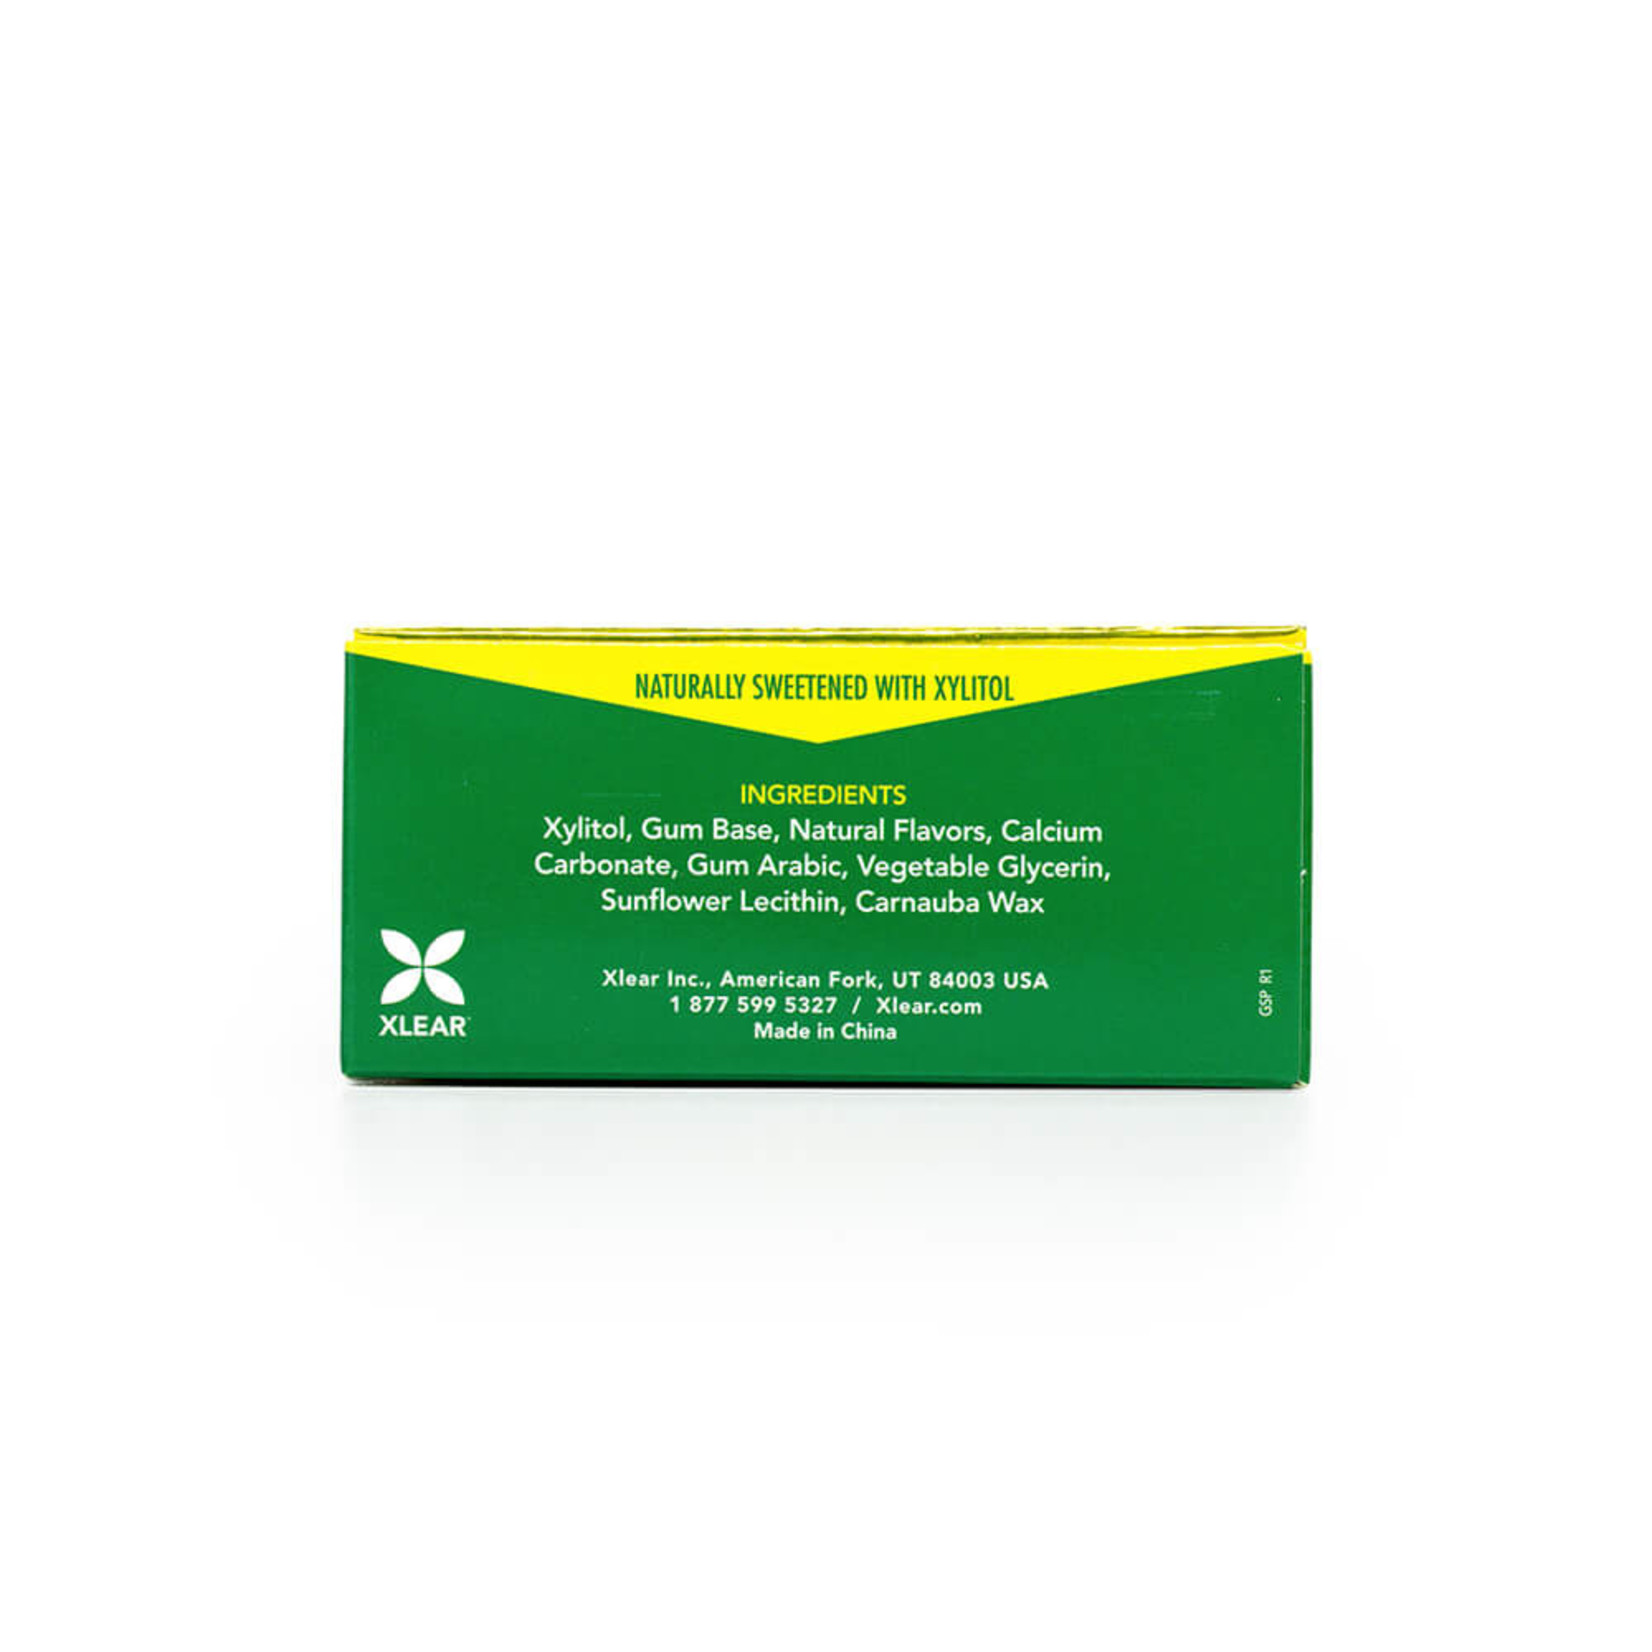 Xlear Xlear - Box of Spry Gum Spearmint - 10 Count